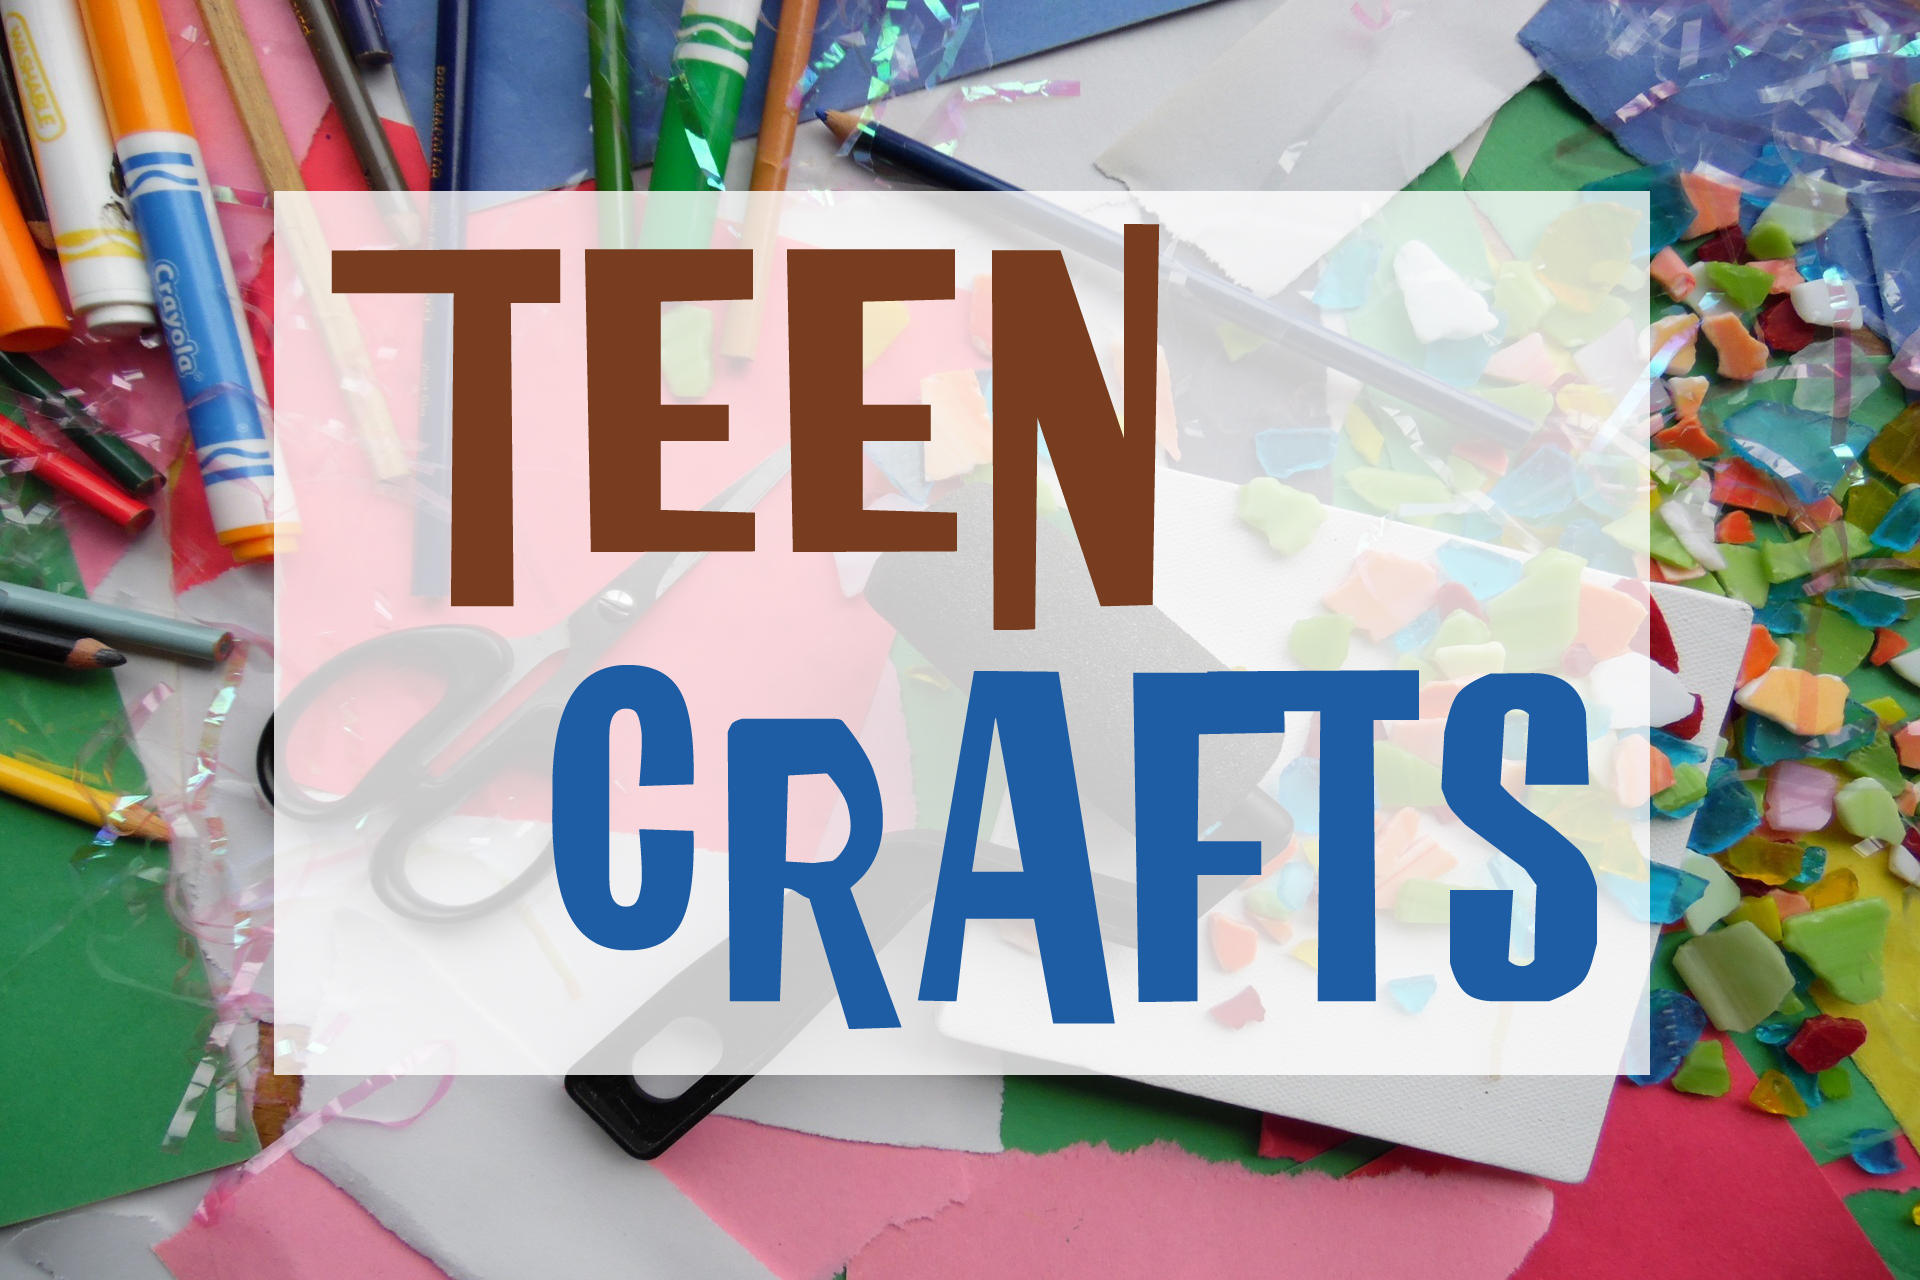 Teen Crafts 67